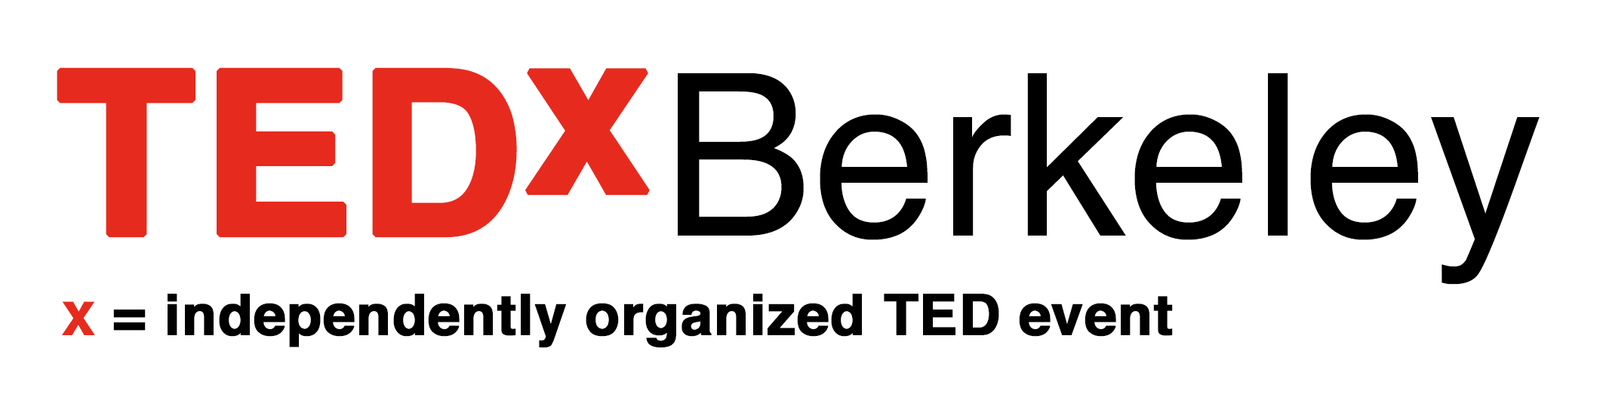 TEDxBerkeley in Berkeley California